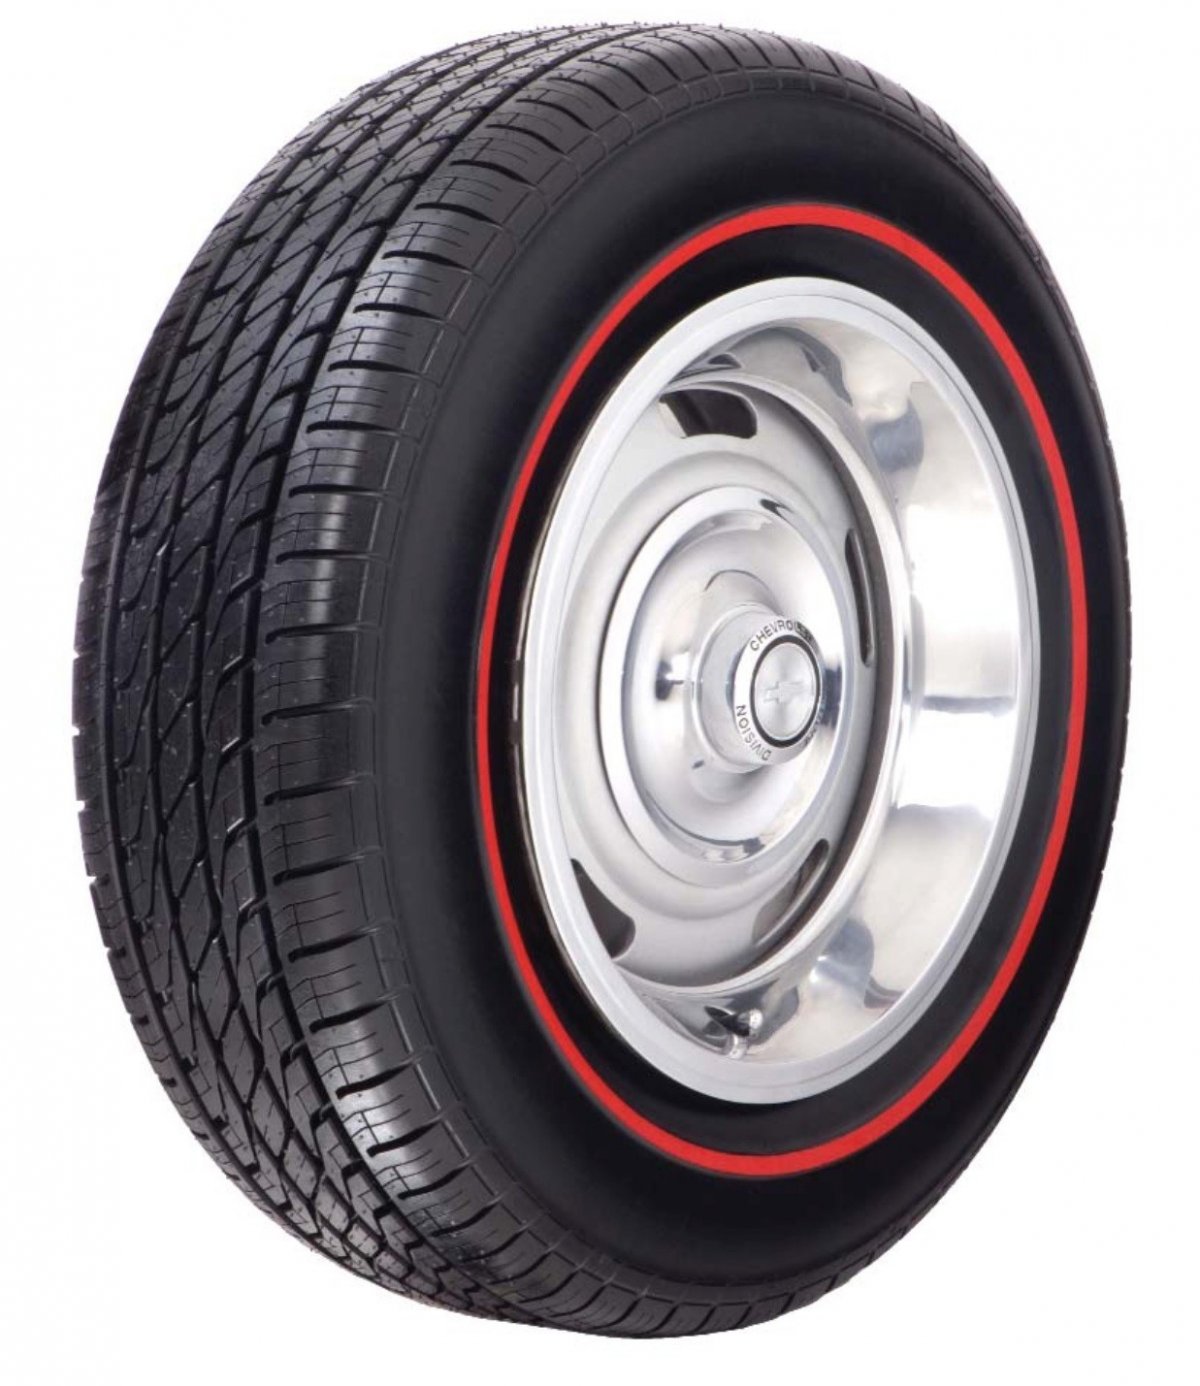 20 inch redline tires